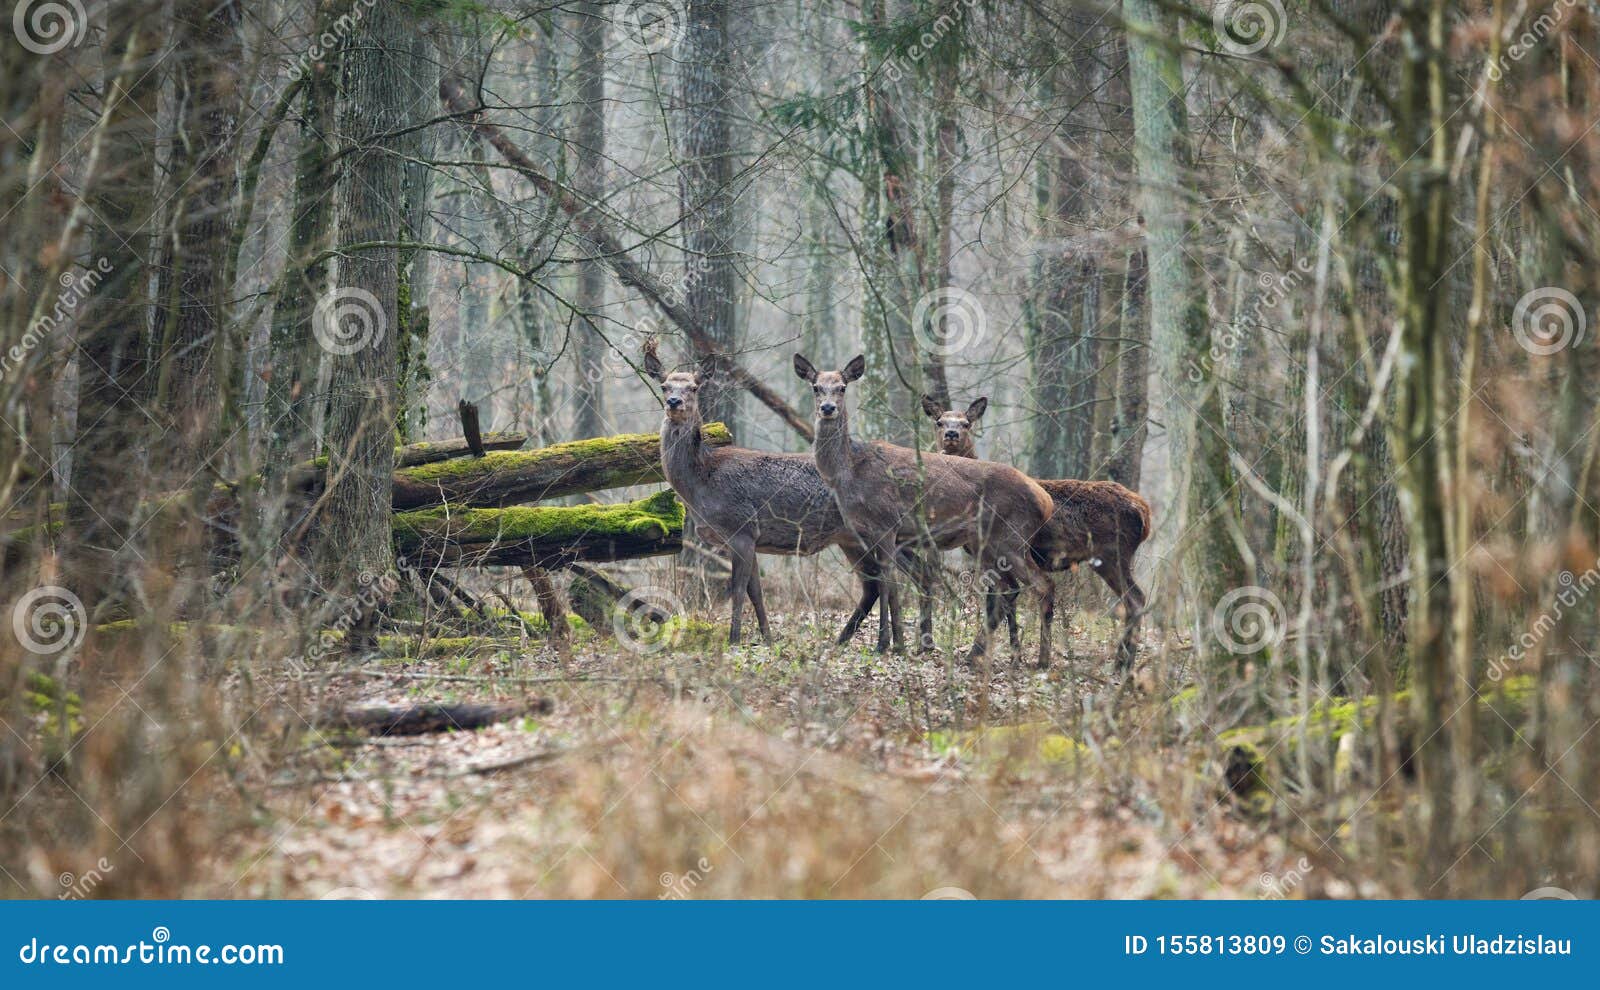 bialowieza forest, belarus, three surprised female deer. spring artistic wildlife scene with cervidae  cervus elaphus